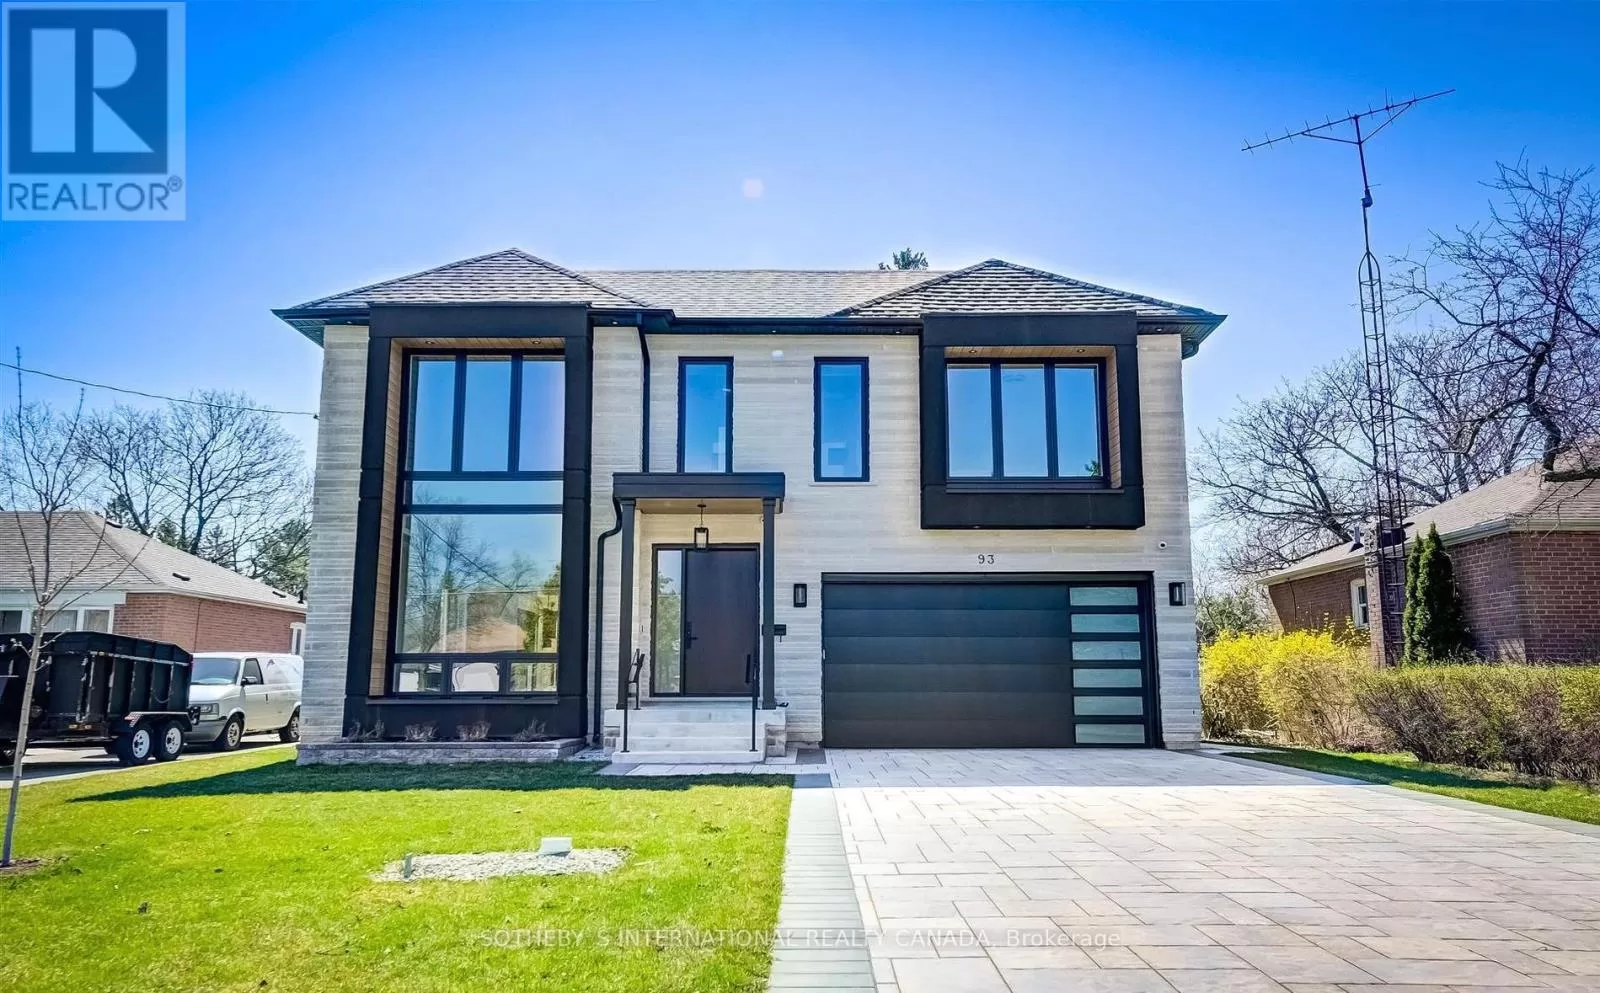 House for rent: 93 Cree Avenue, Toronto, Ontario M1M 1Z9